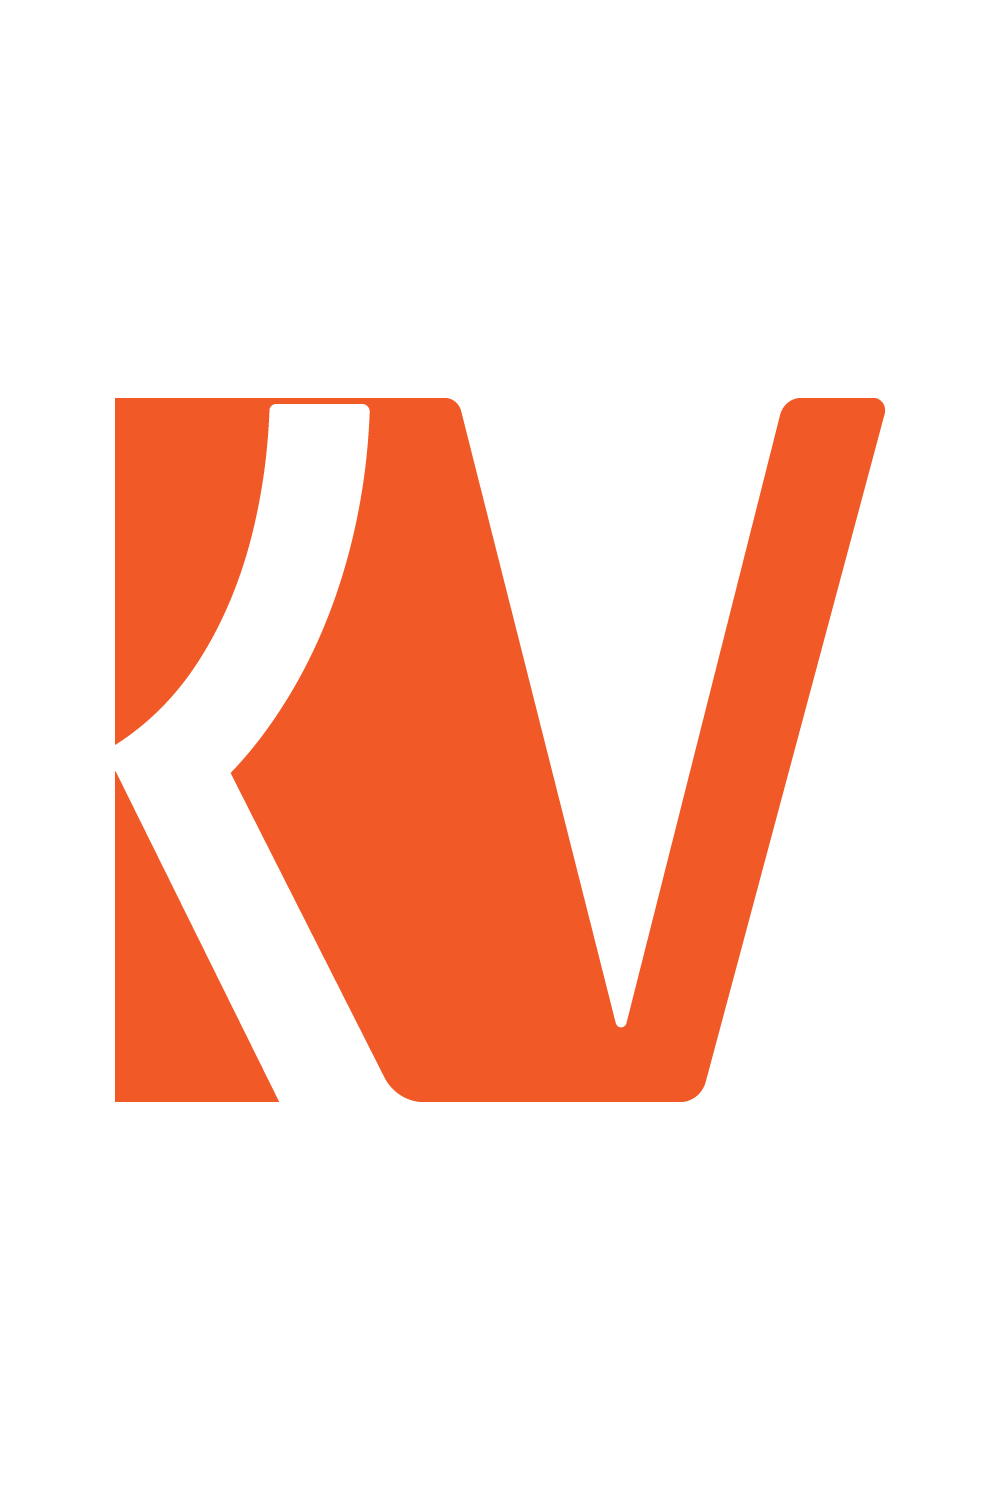 professional KV letters logo design KV logo vector icon best company identity VK logo monogram template arts pinterest preview image.